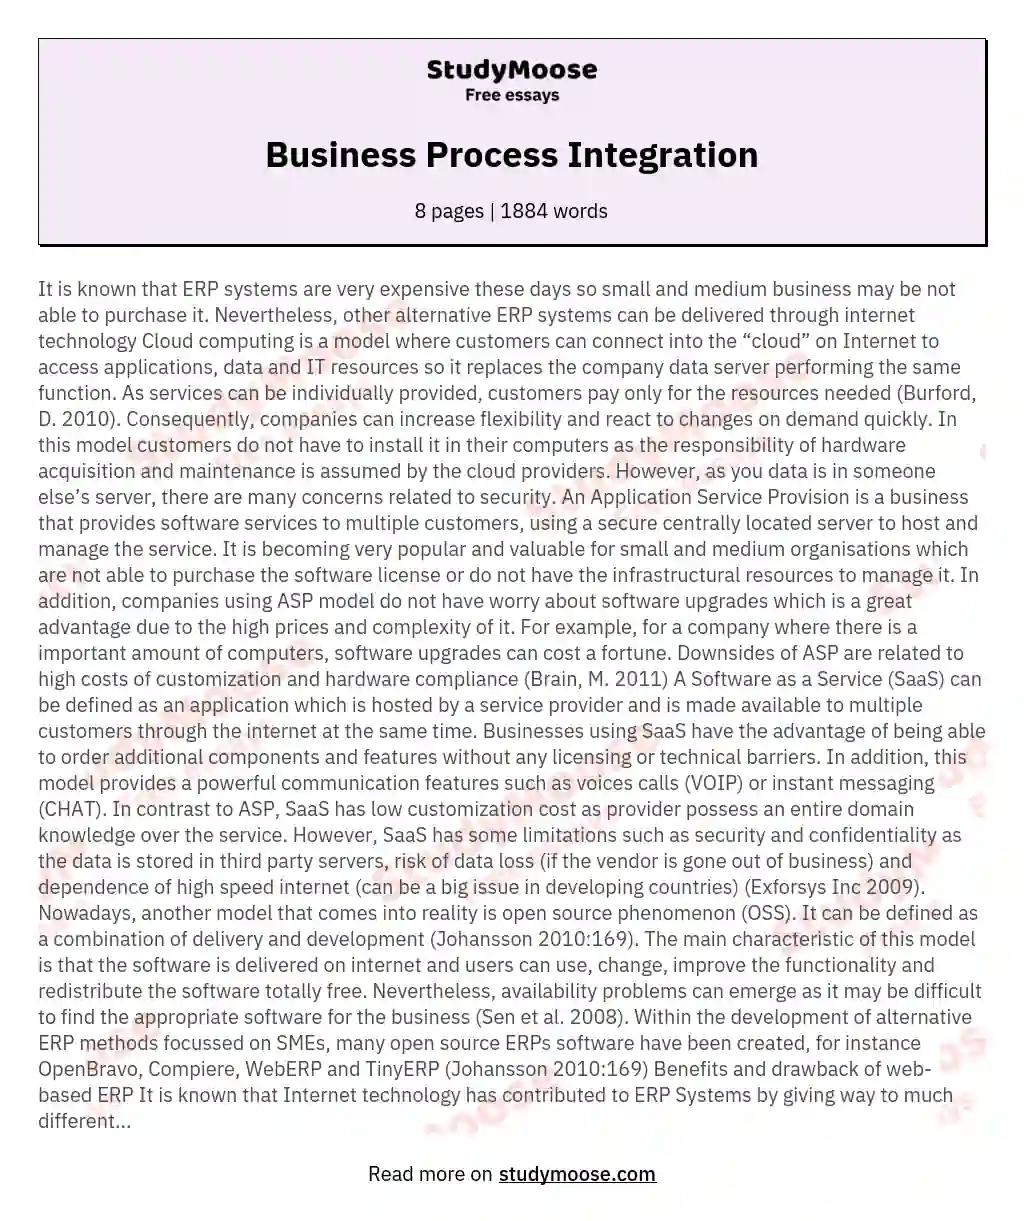 Business Process Integration essay